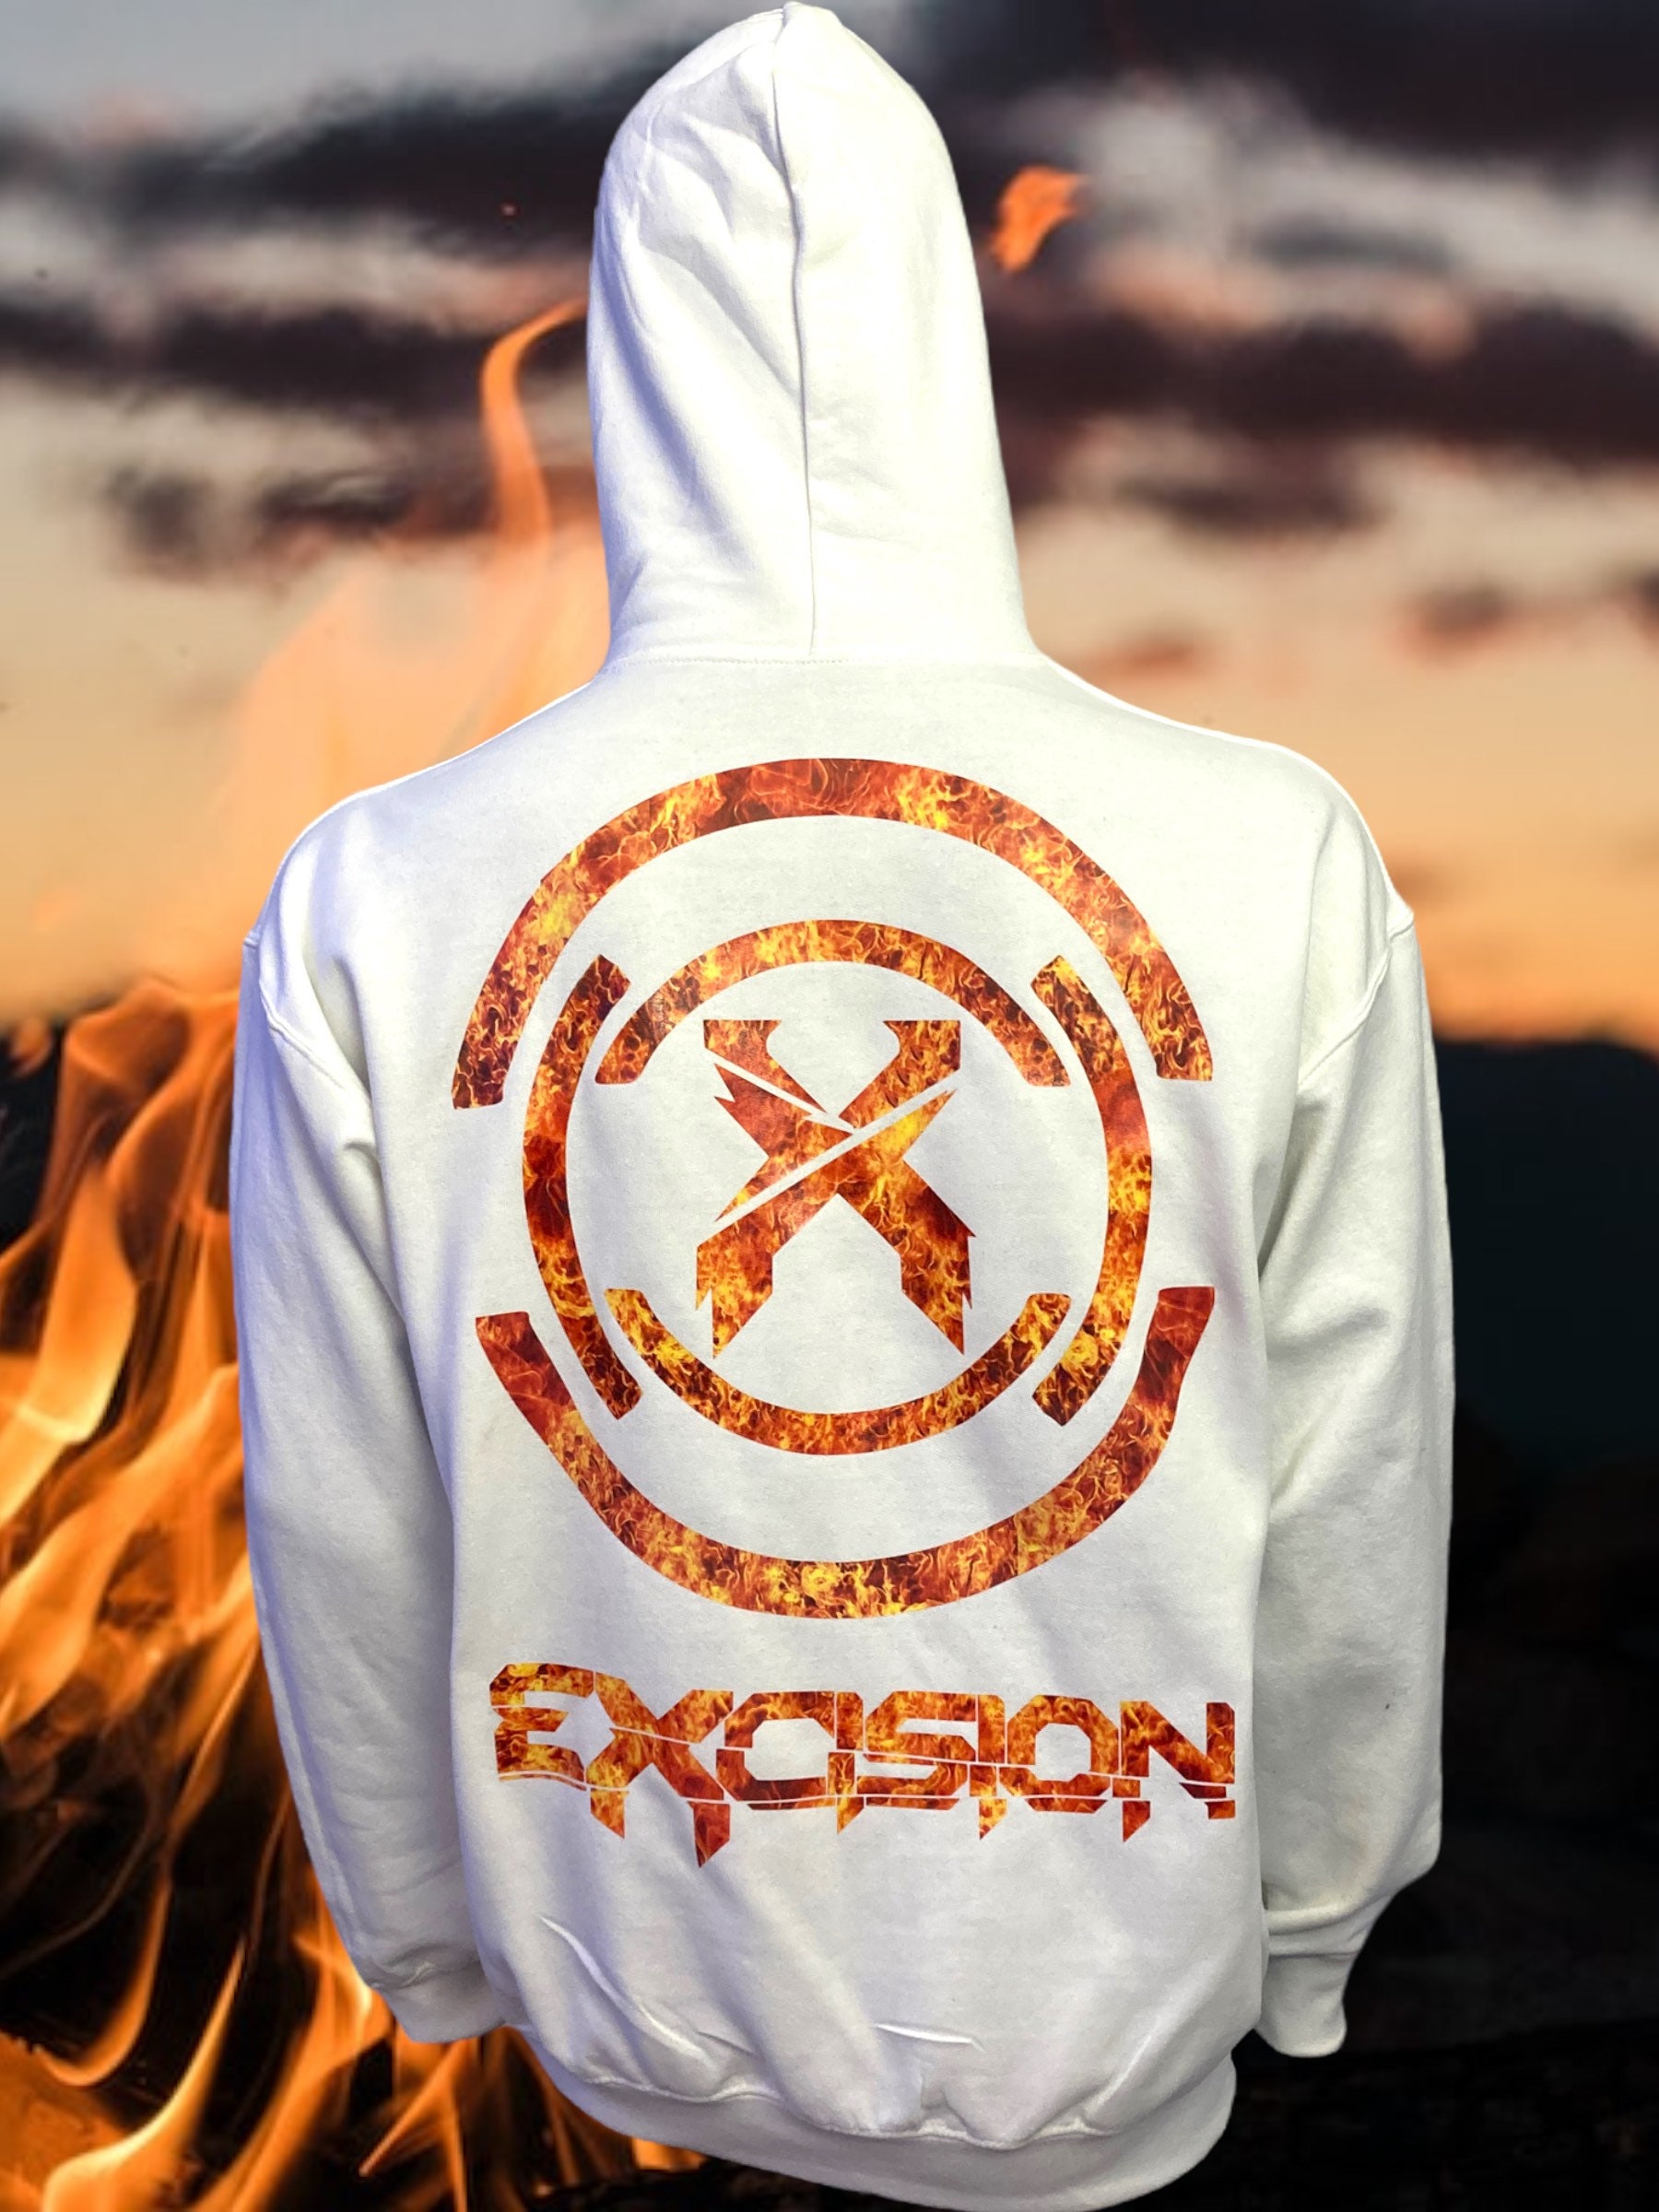 Excision 'Sliced' Logo All-Over Spectrum Reflective Zip Up Jacket